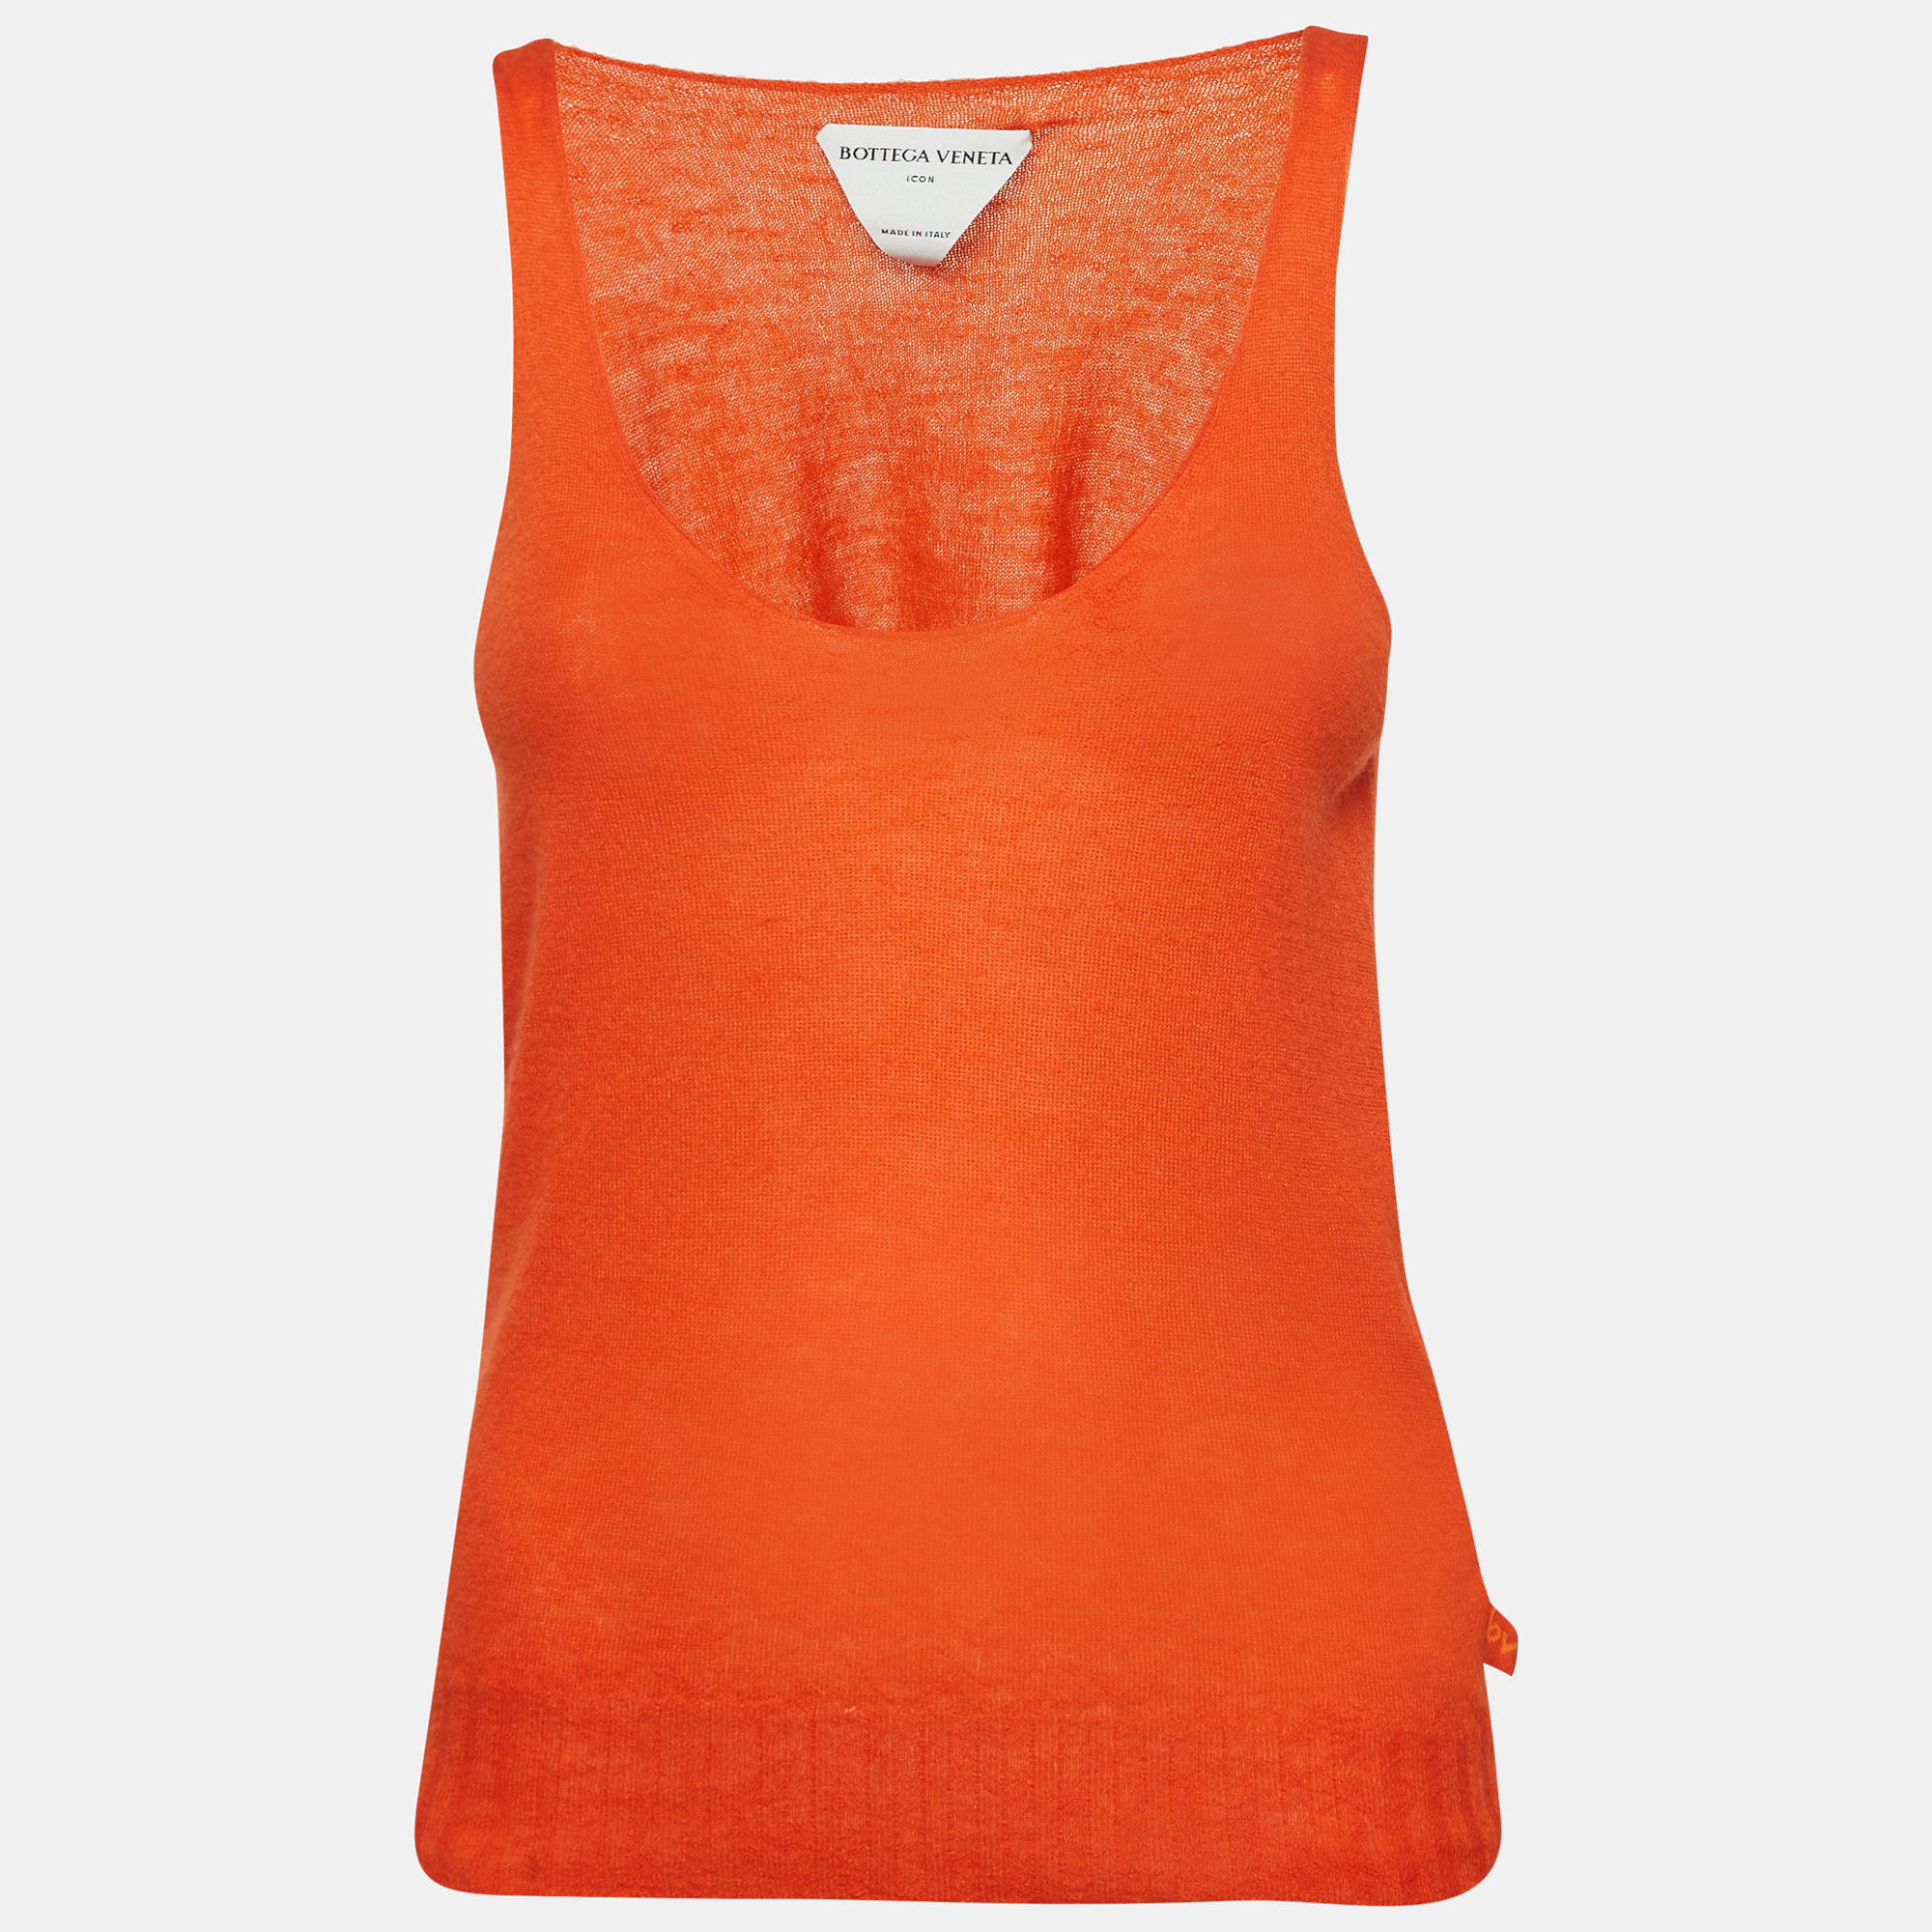 

Bottega Veneta Orange Superfine Cashmere Knit Sleeveless Top